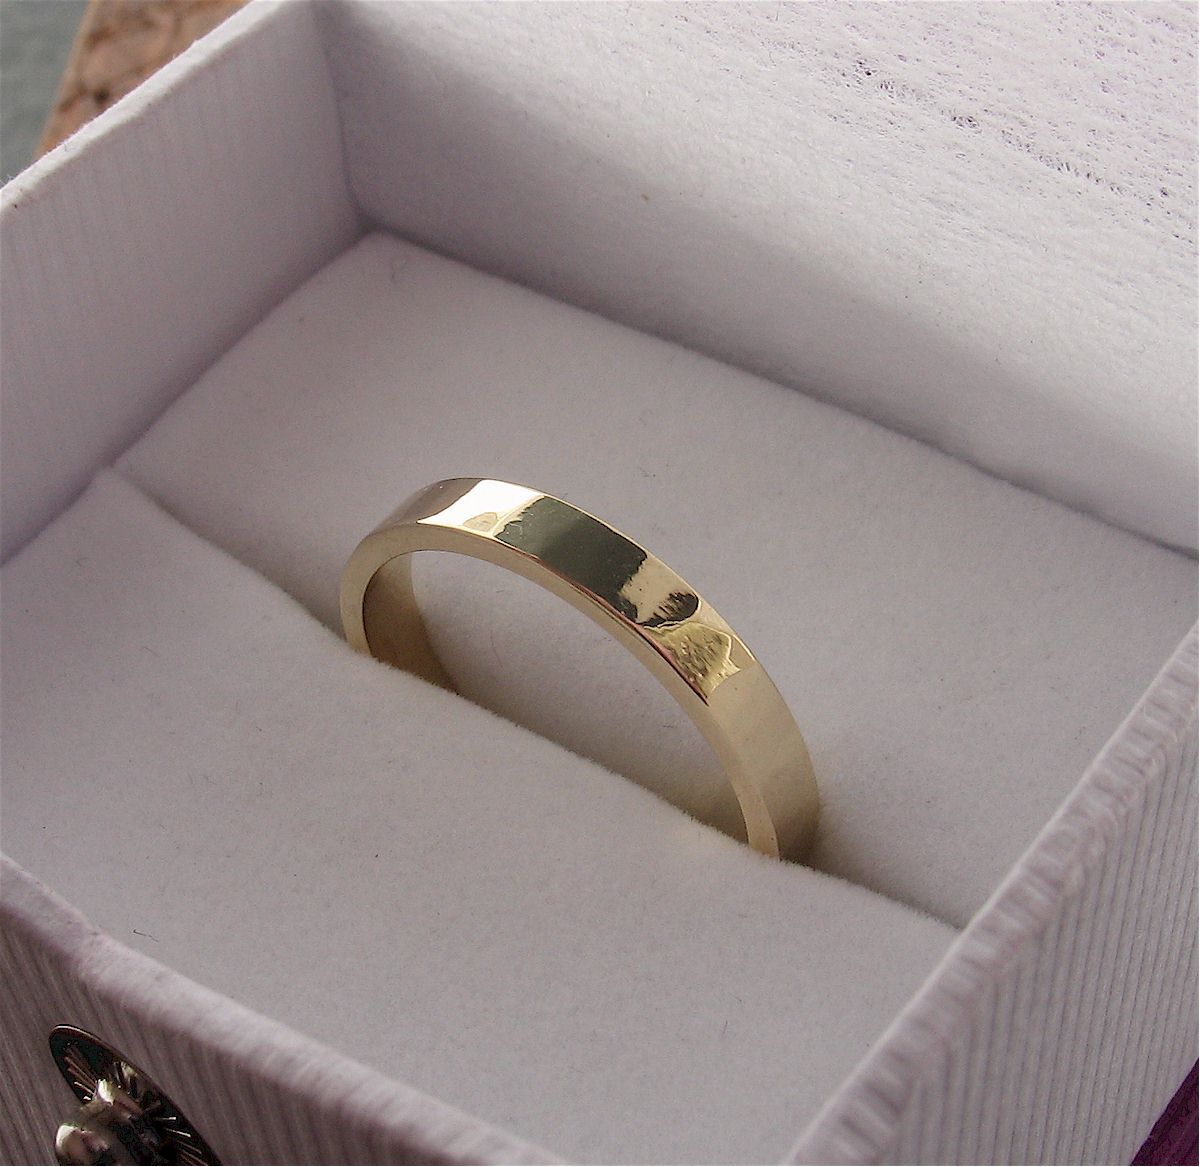 Gold thin wedding ring, Water Ripples design - Cumbrian Designs